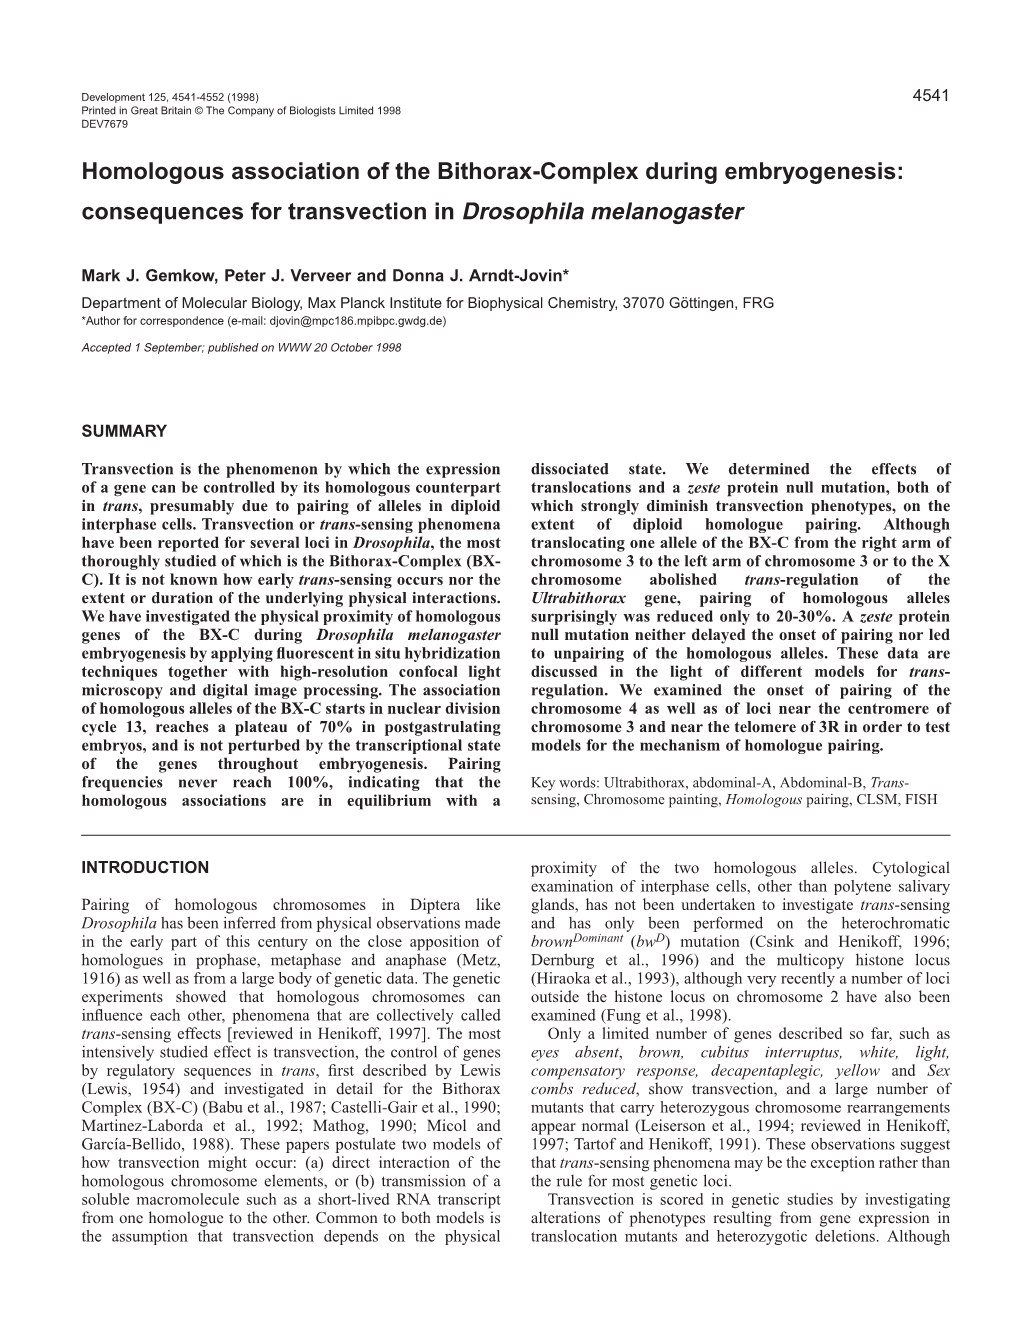 Consequences for Transvection in Drosophila Melanogaster